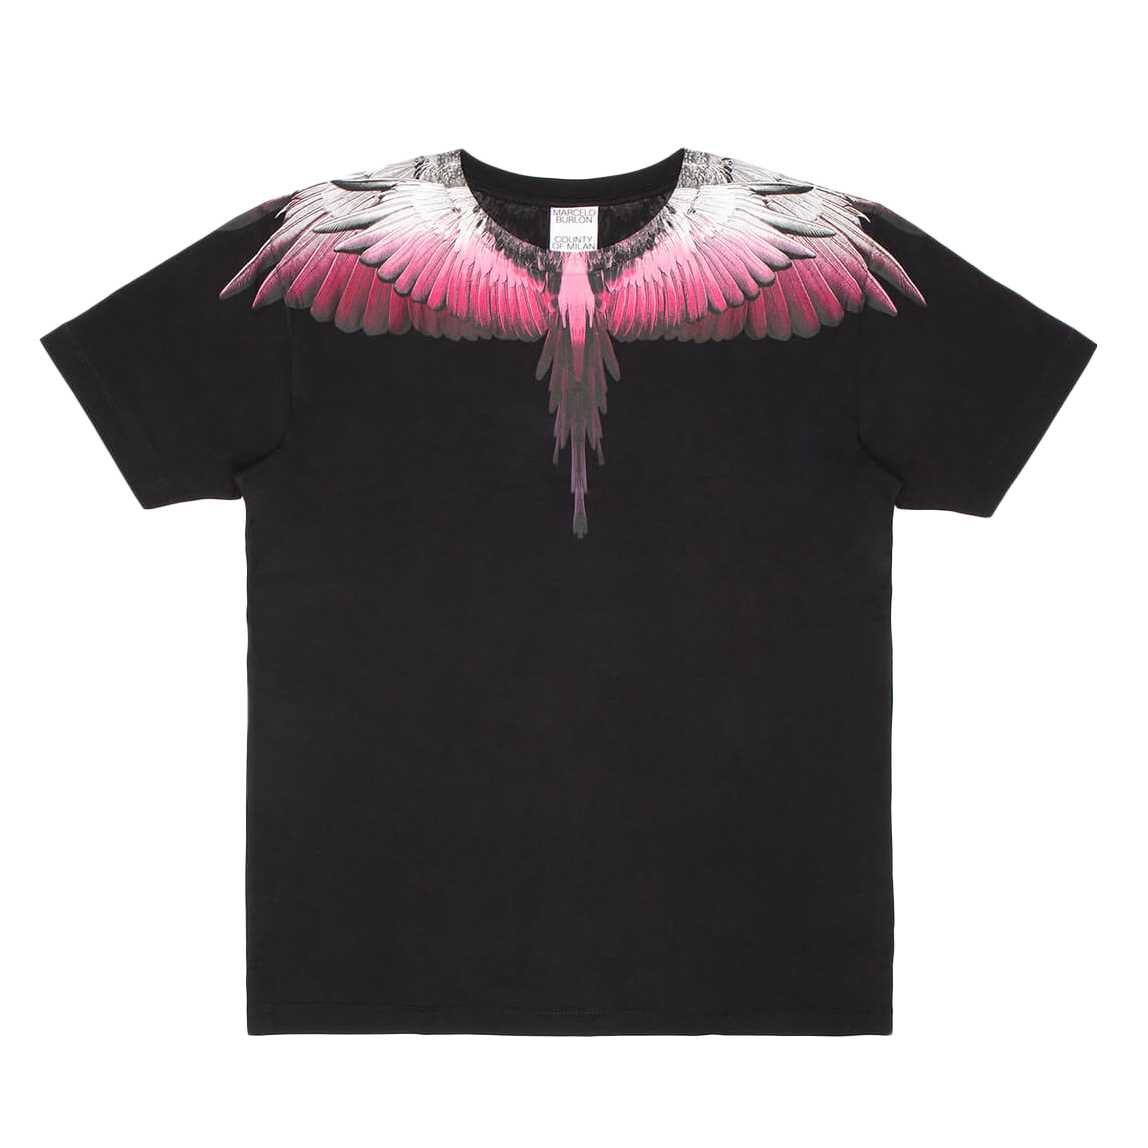 Marcelo Burlon Wing T-Shirt Black Pink メンズ - FW21 - JP